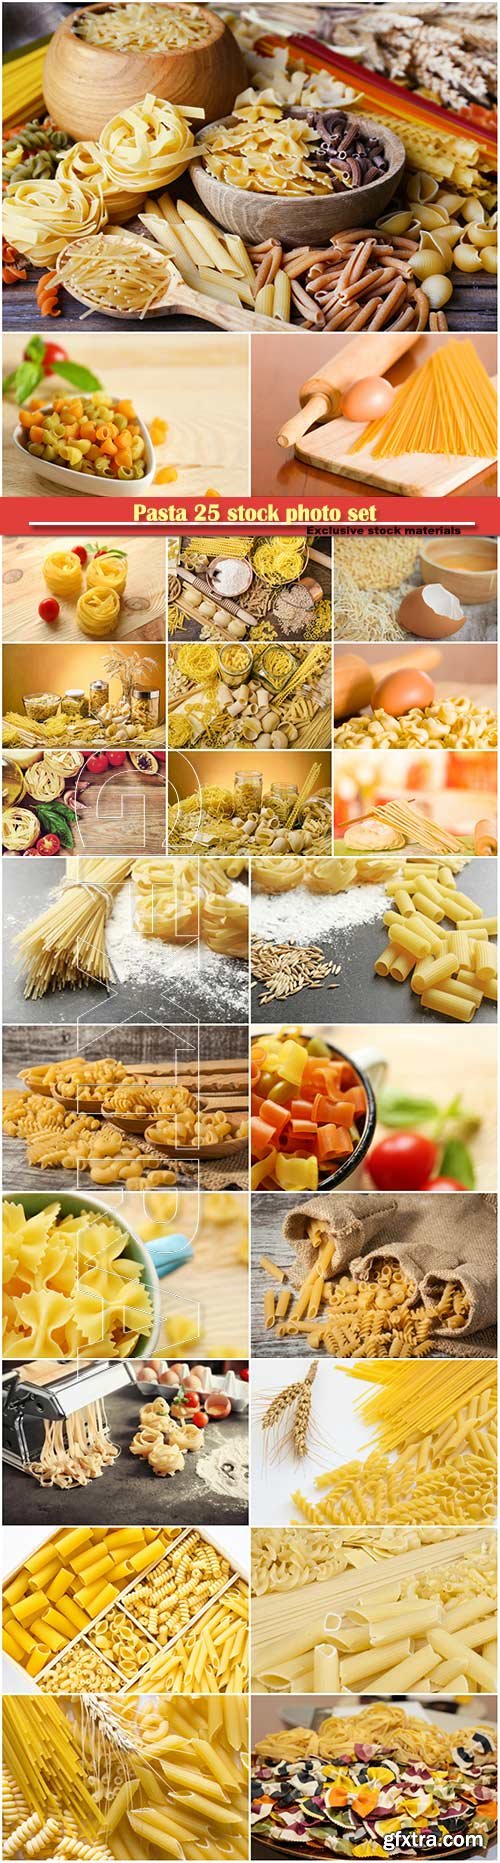 Pasta 25 stock photo set